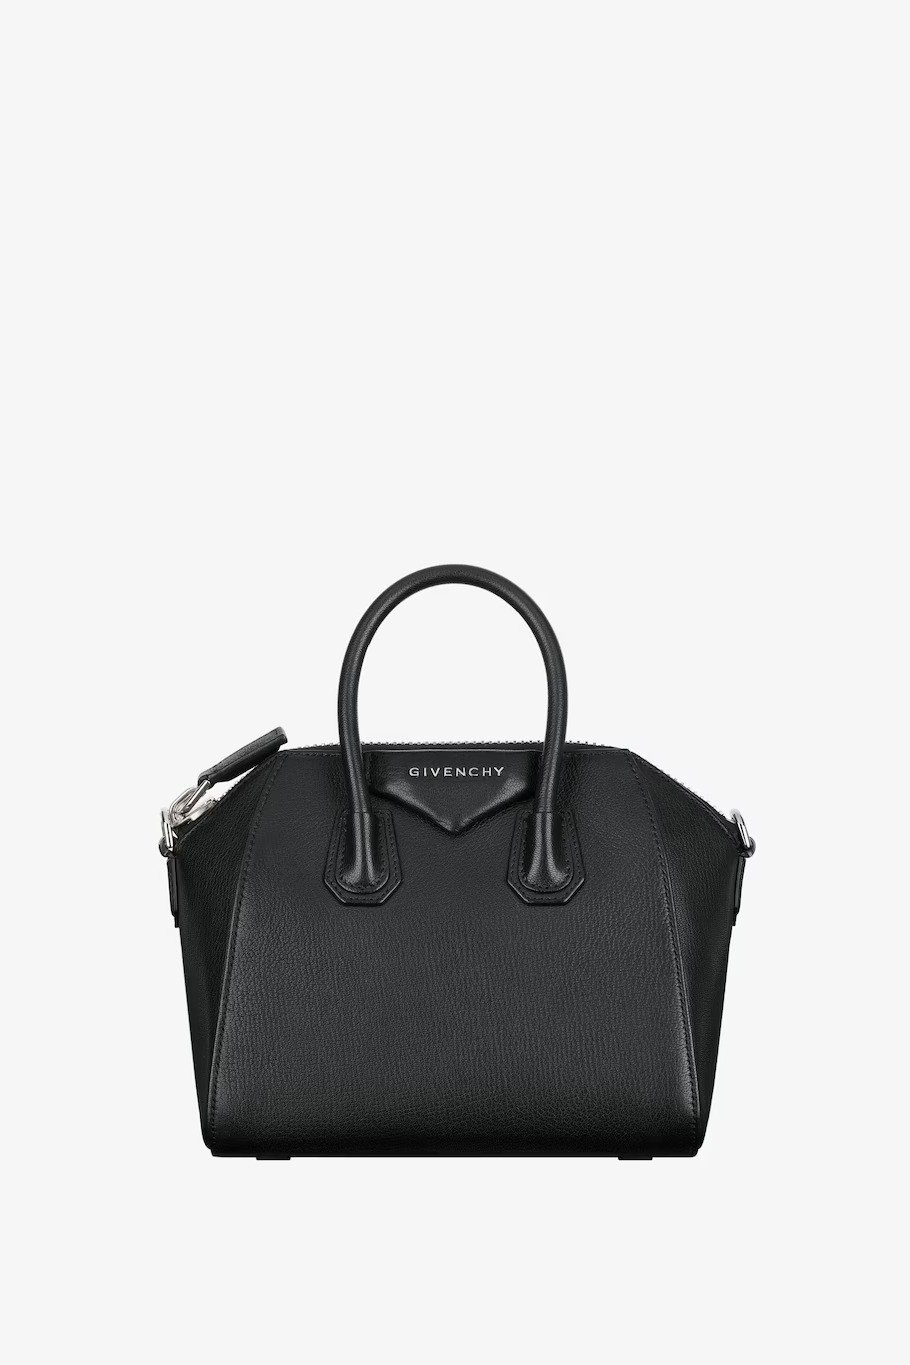 Givenchy - Mini Antigona bag in Box leather - Black